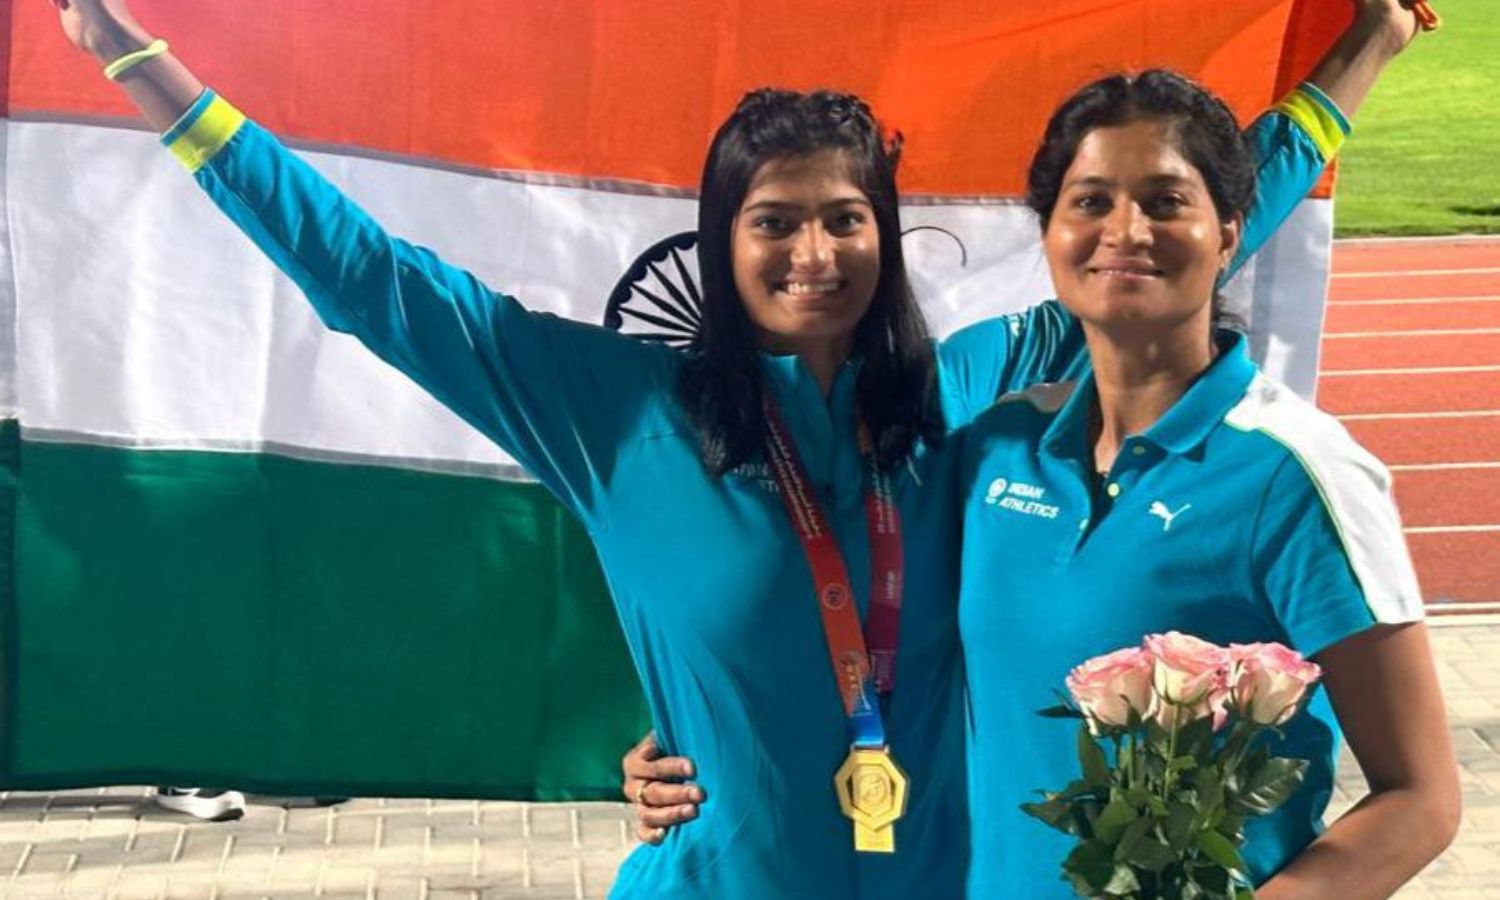 Mother's girl Pavana, Asian U20 longjump gold medallist, focused on